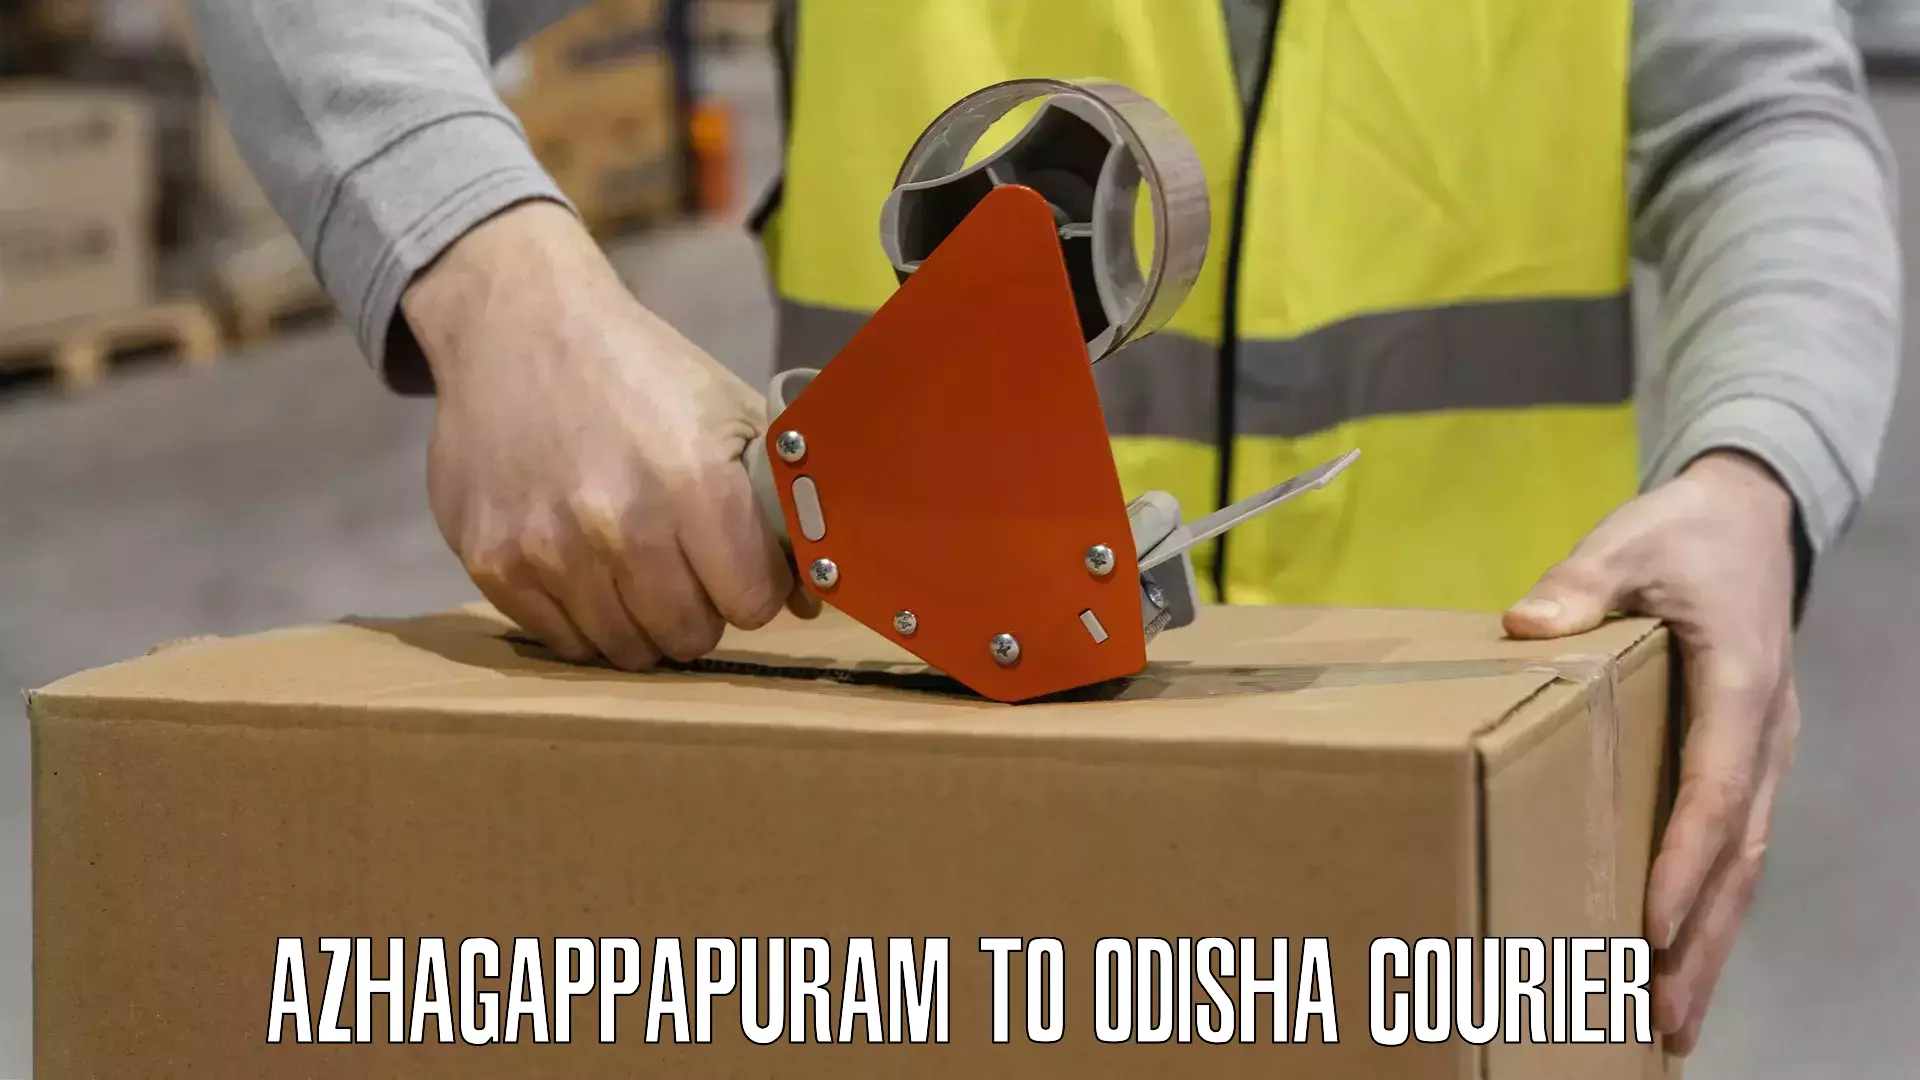 Local delivery service Azhagappapuram to Odisha